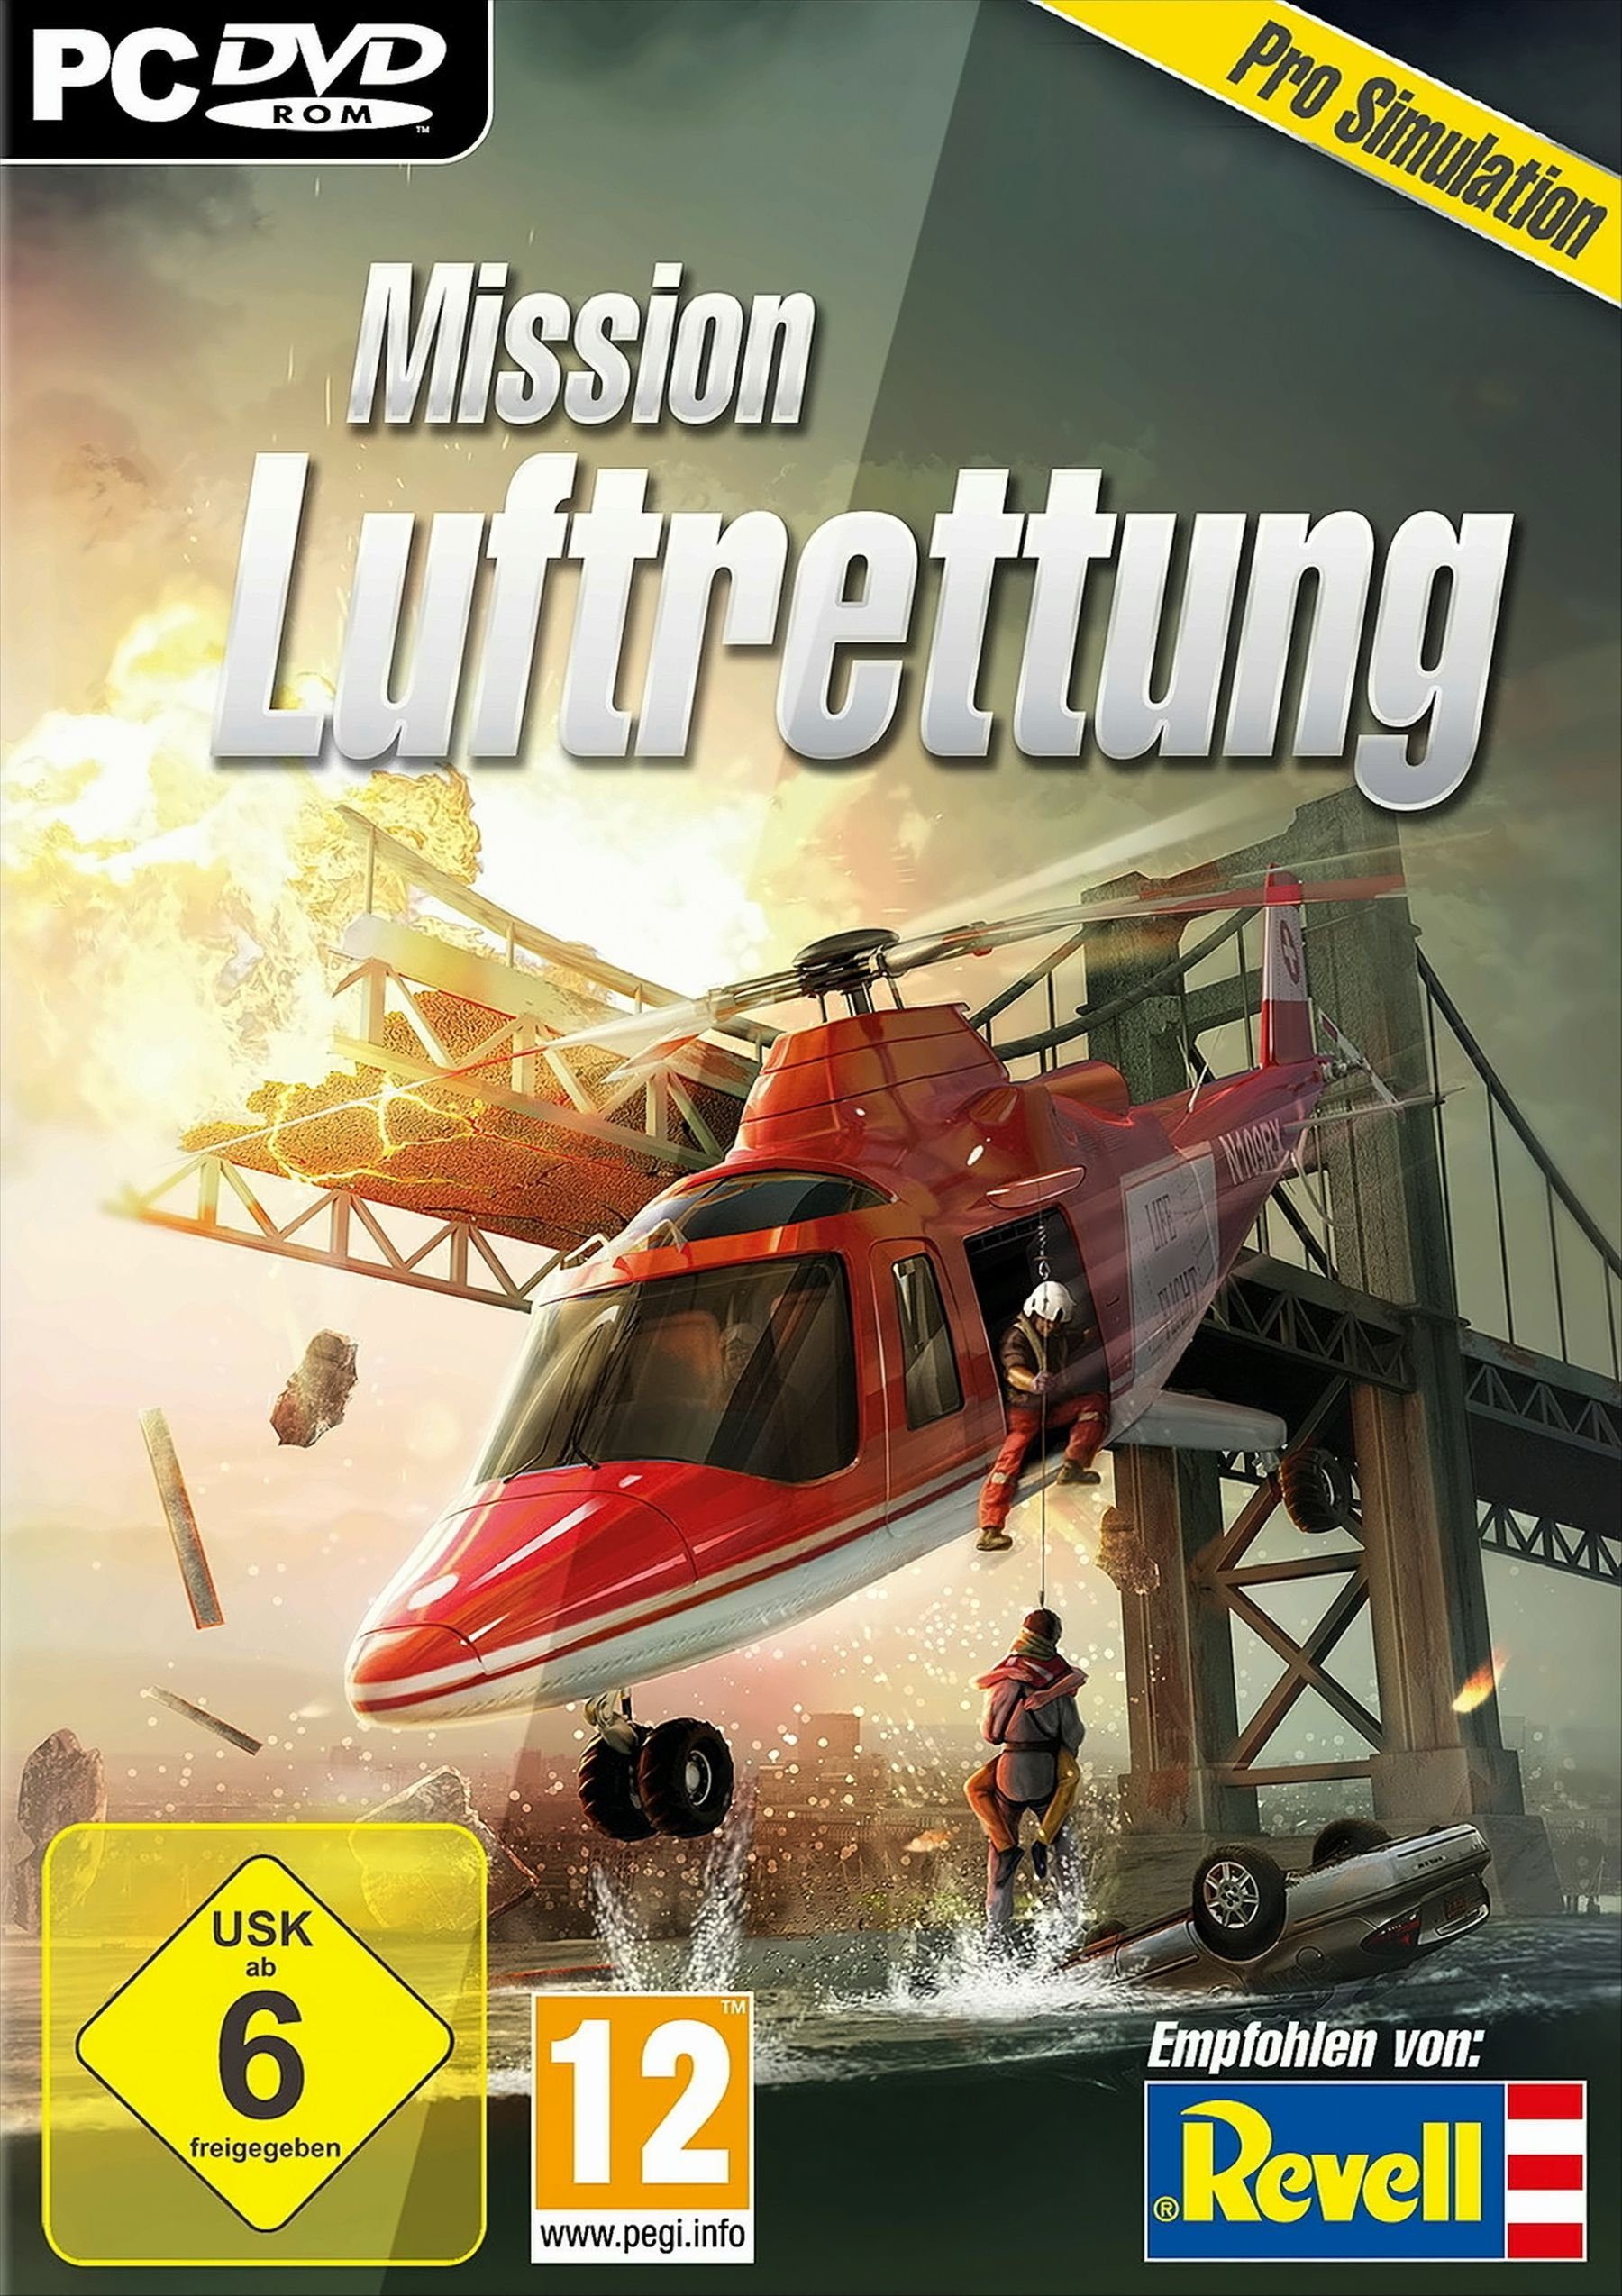 Mission Luftrettung PC